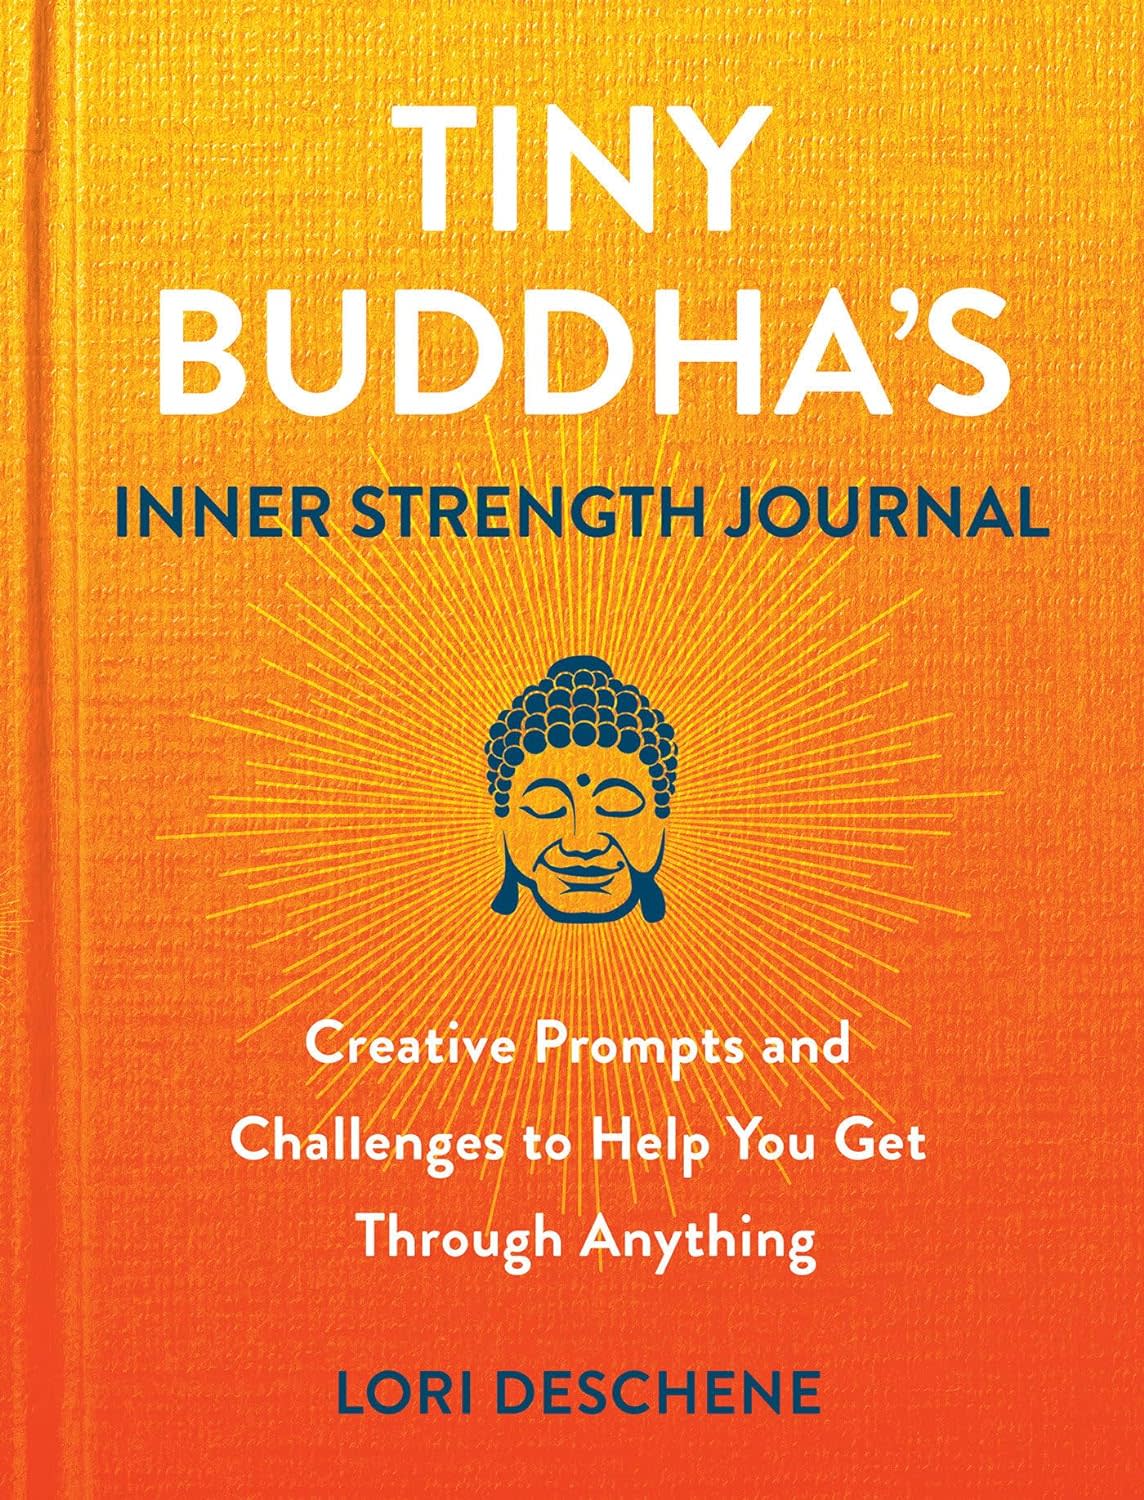 "Tiny Buddha's Inner Strength Journal"